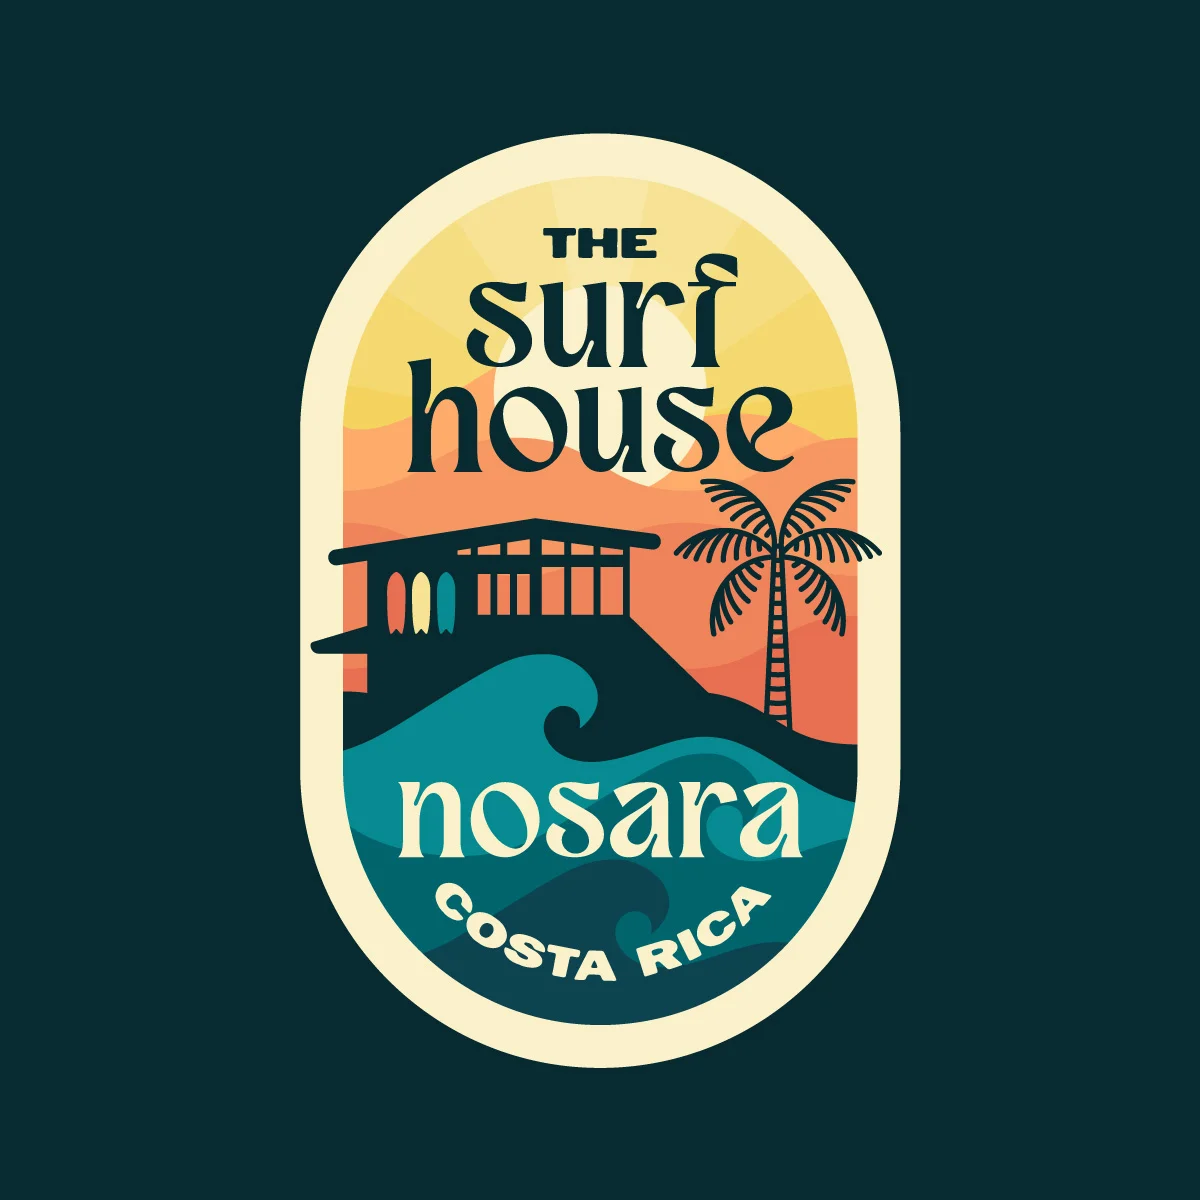 lindsay-mcghee-desigs-the-surf-house-nosara-logo-oval-dark-1200x1200